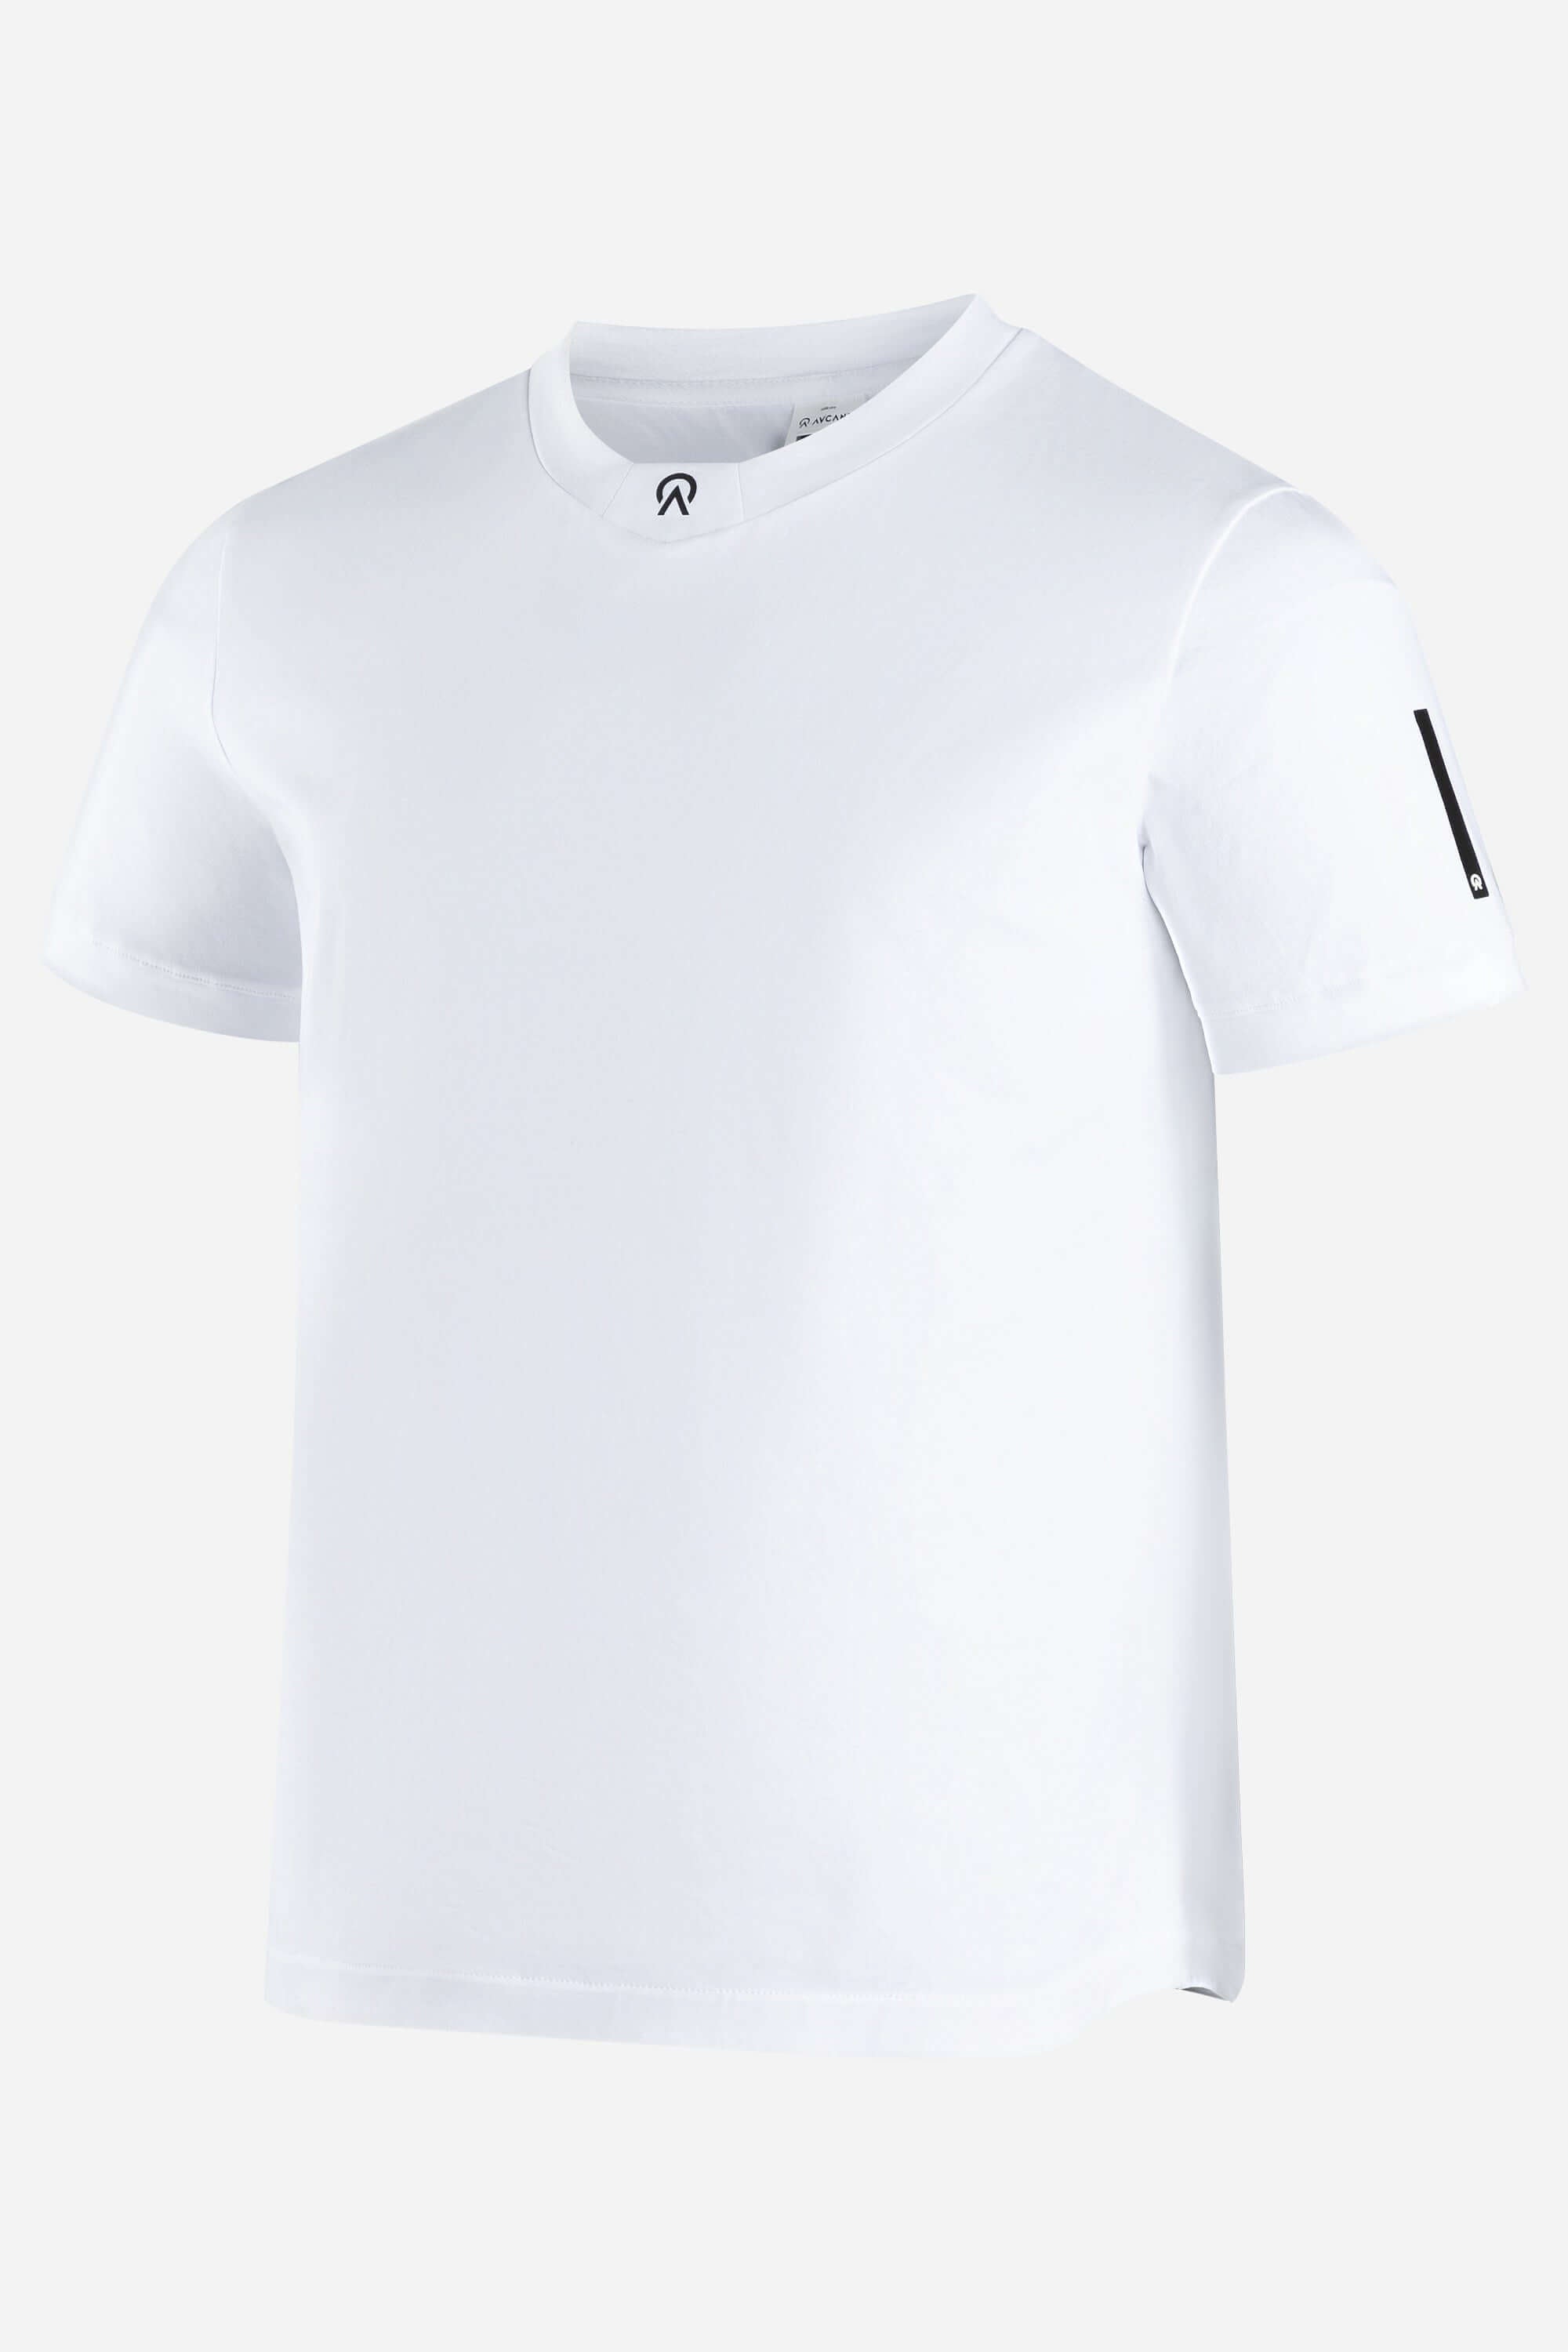 White AYCANE cotton t-shirt 